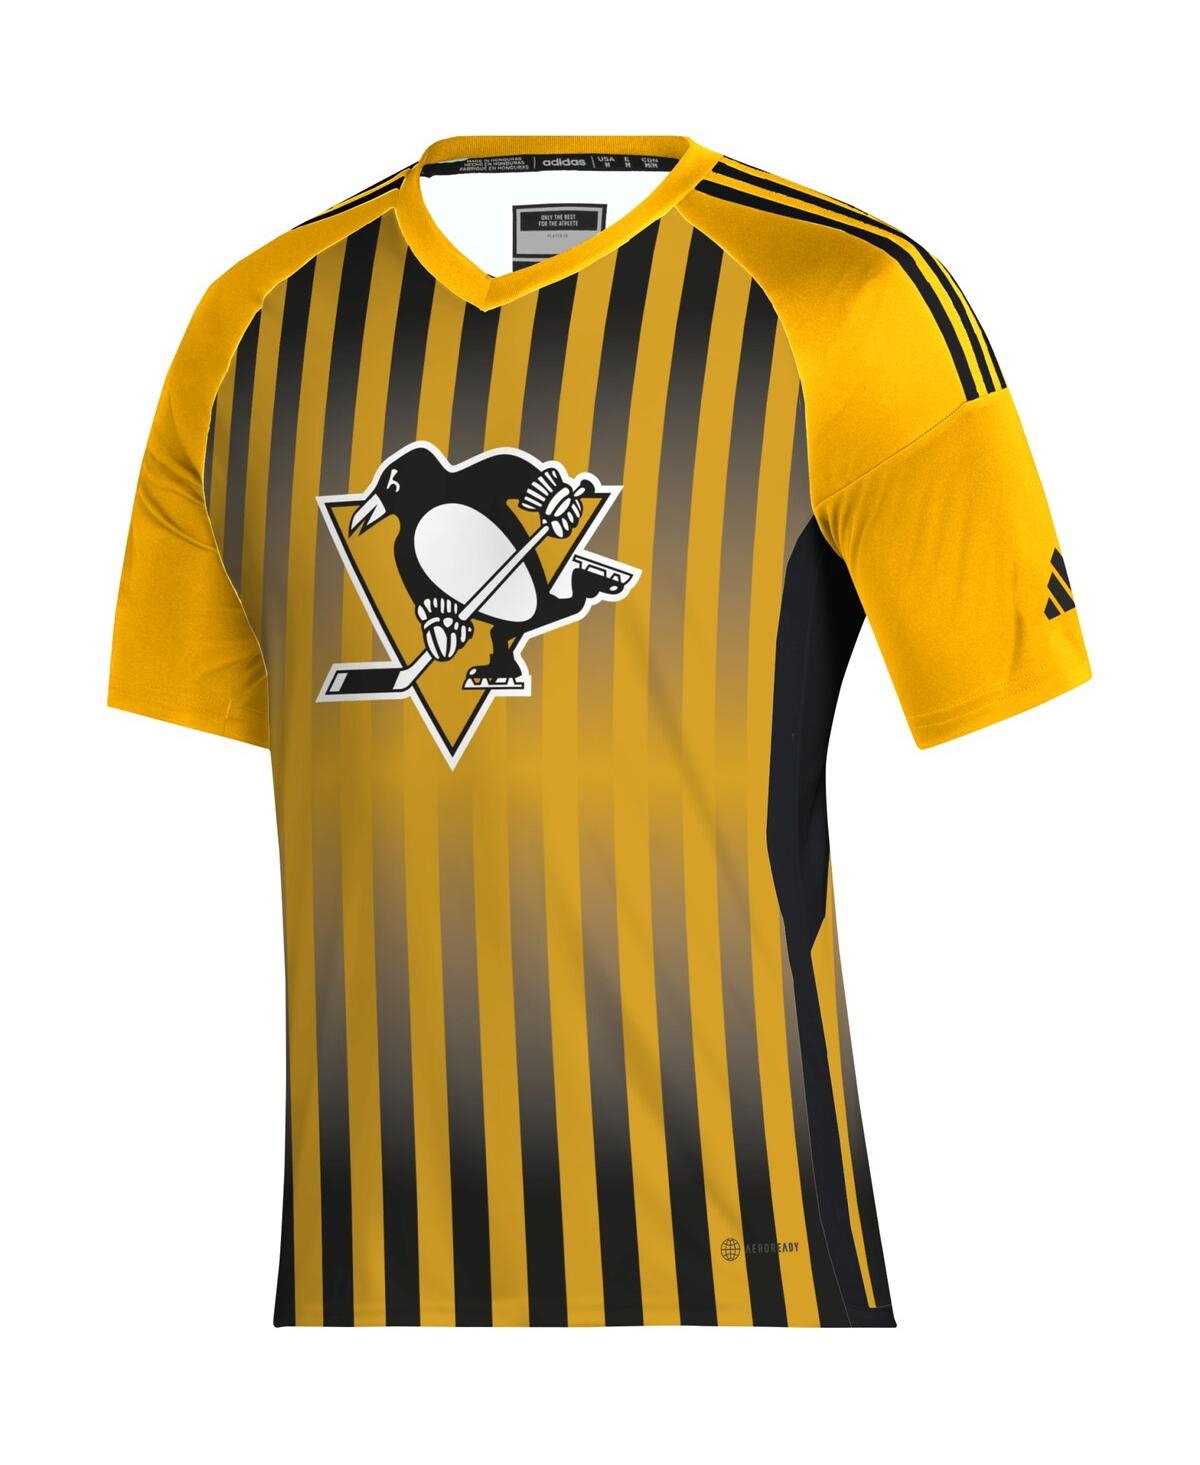 Shop Adidas Originals Men's Adidas Gold Pittsburgh Penguins Aeroready Raglan Soccer Top